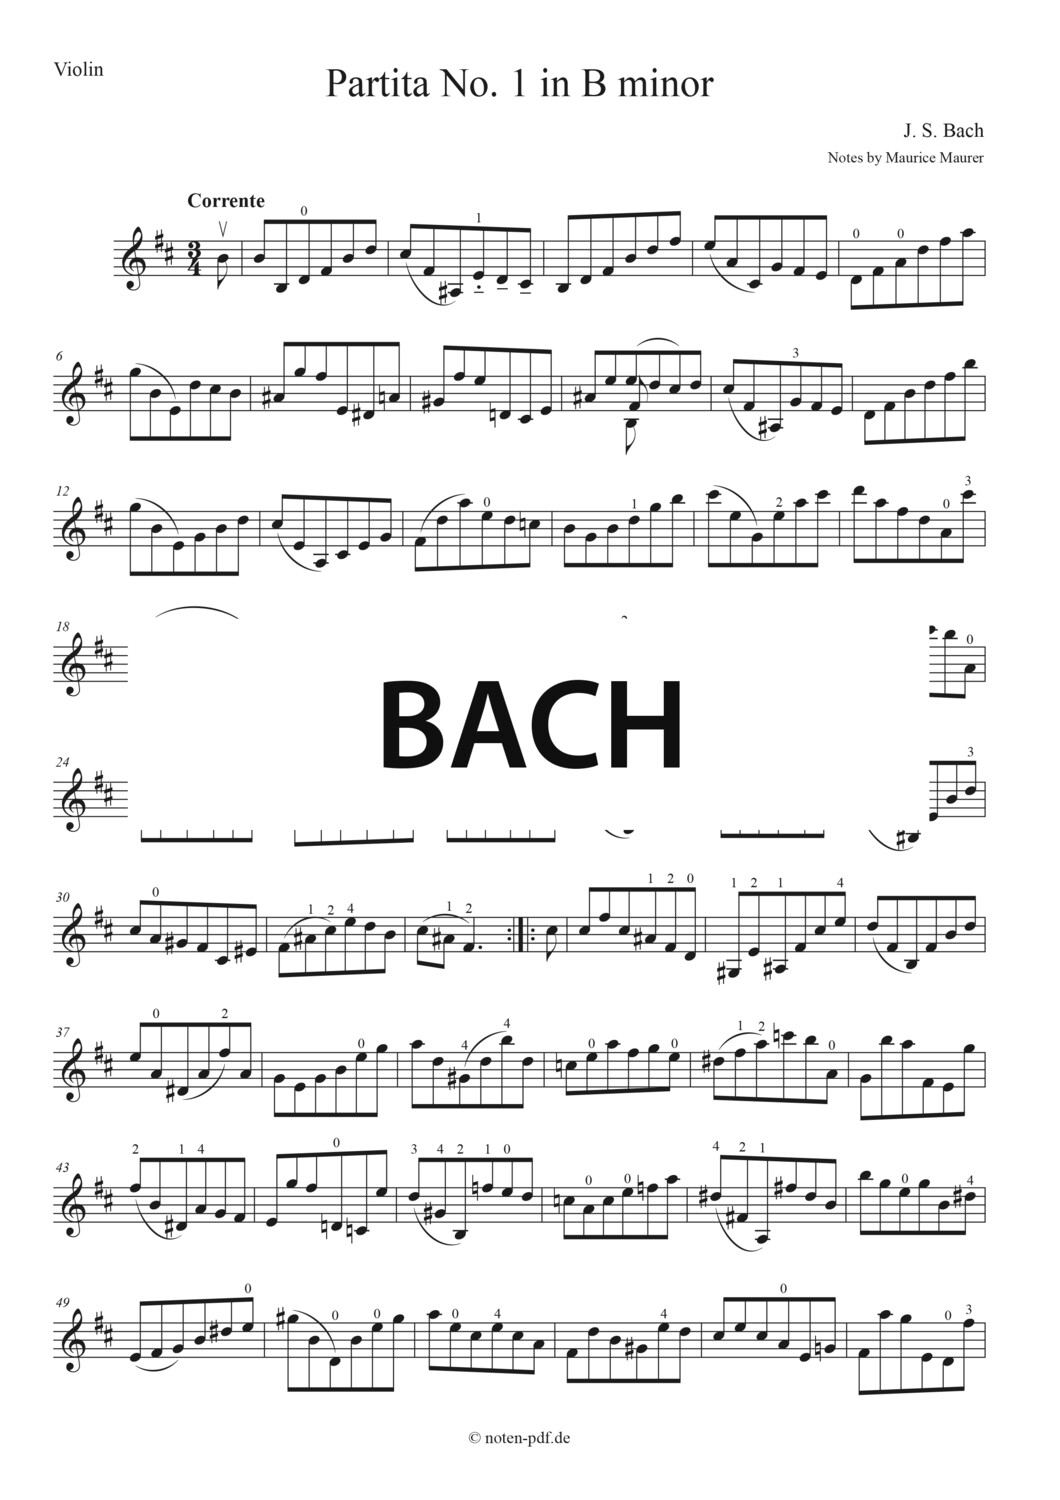 Bach: Partita No. 1 - 3. Mov. "Corrente"